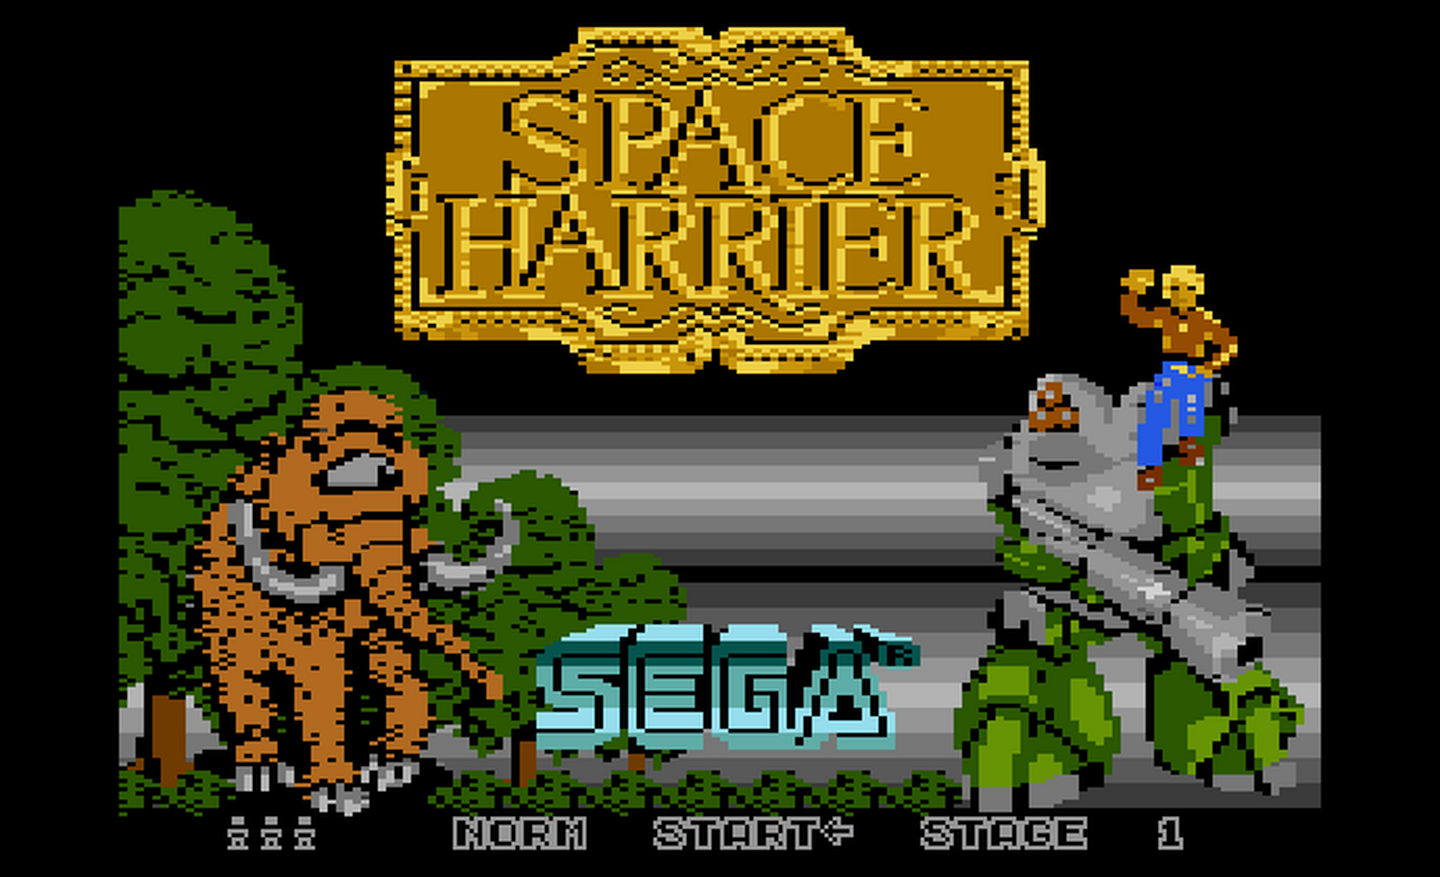 Atari GameBase Space_Harrier (No_Publisher) 2018